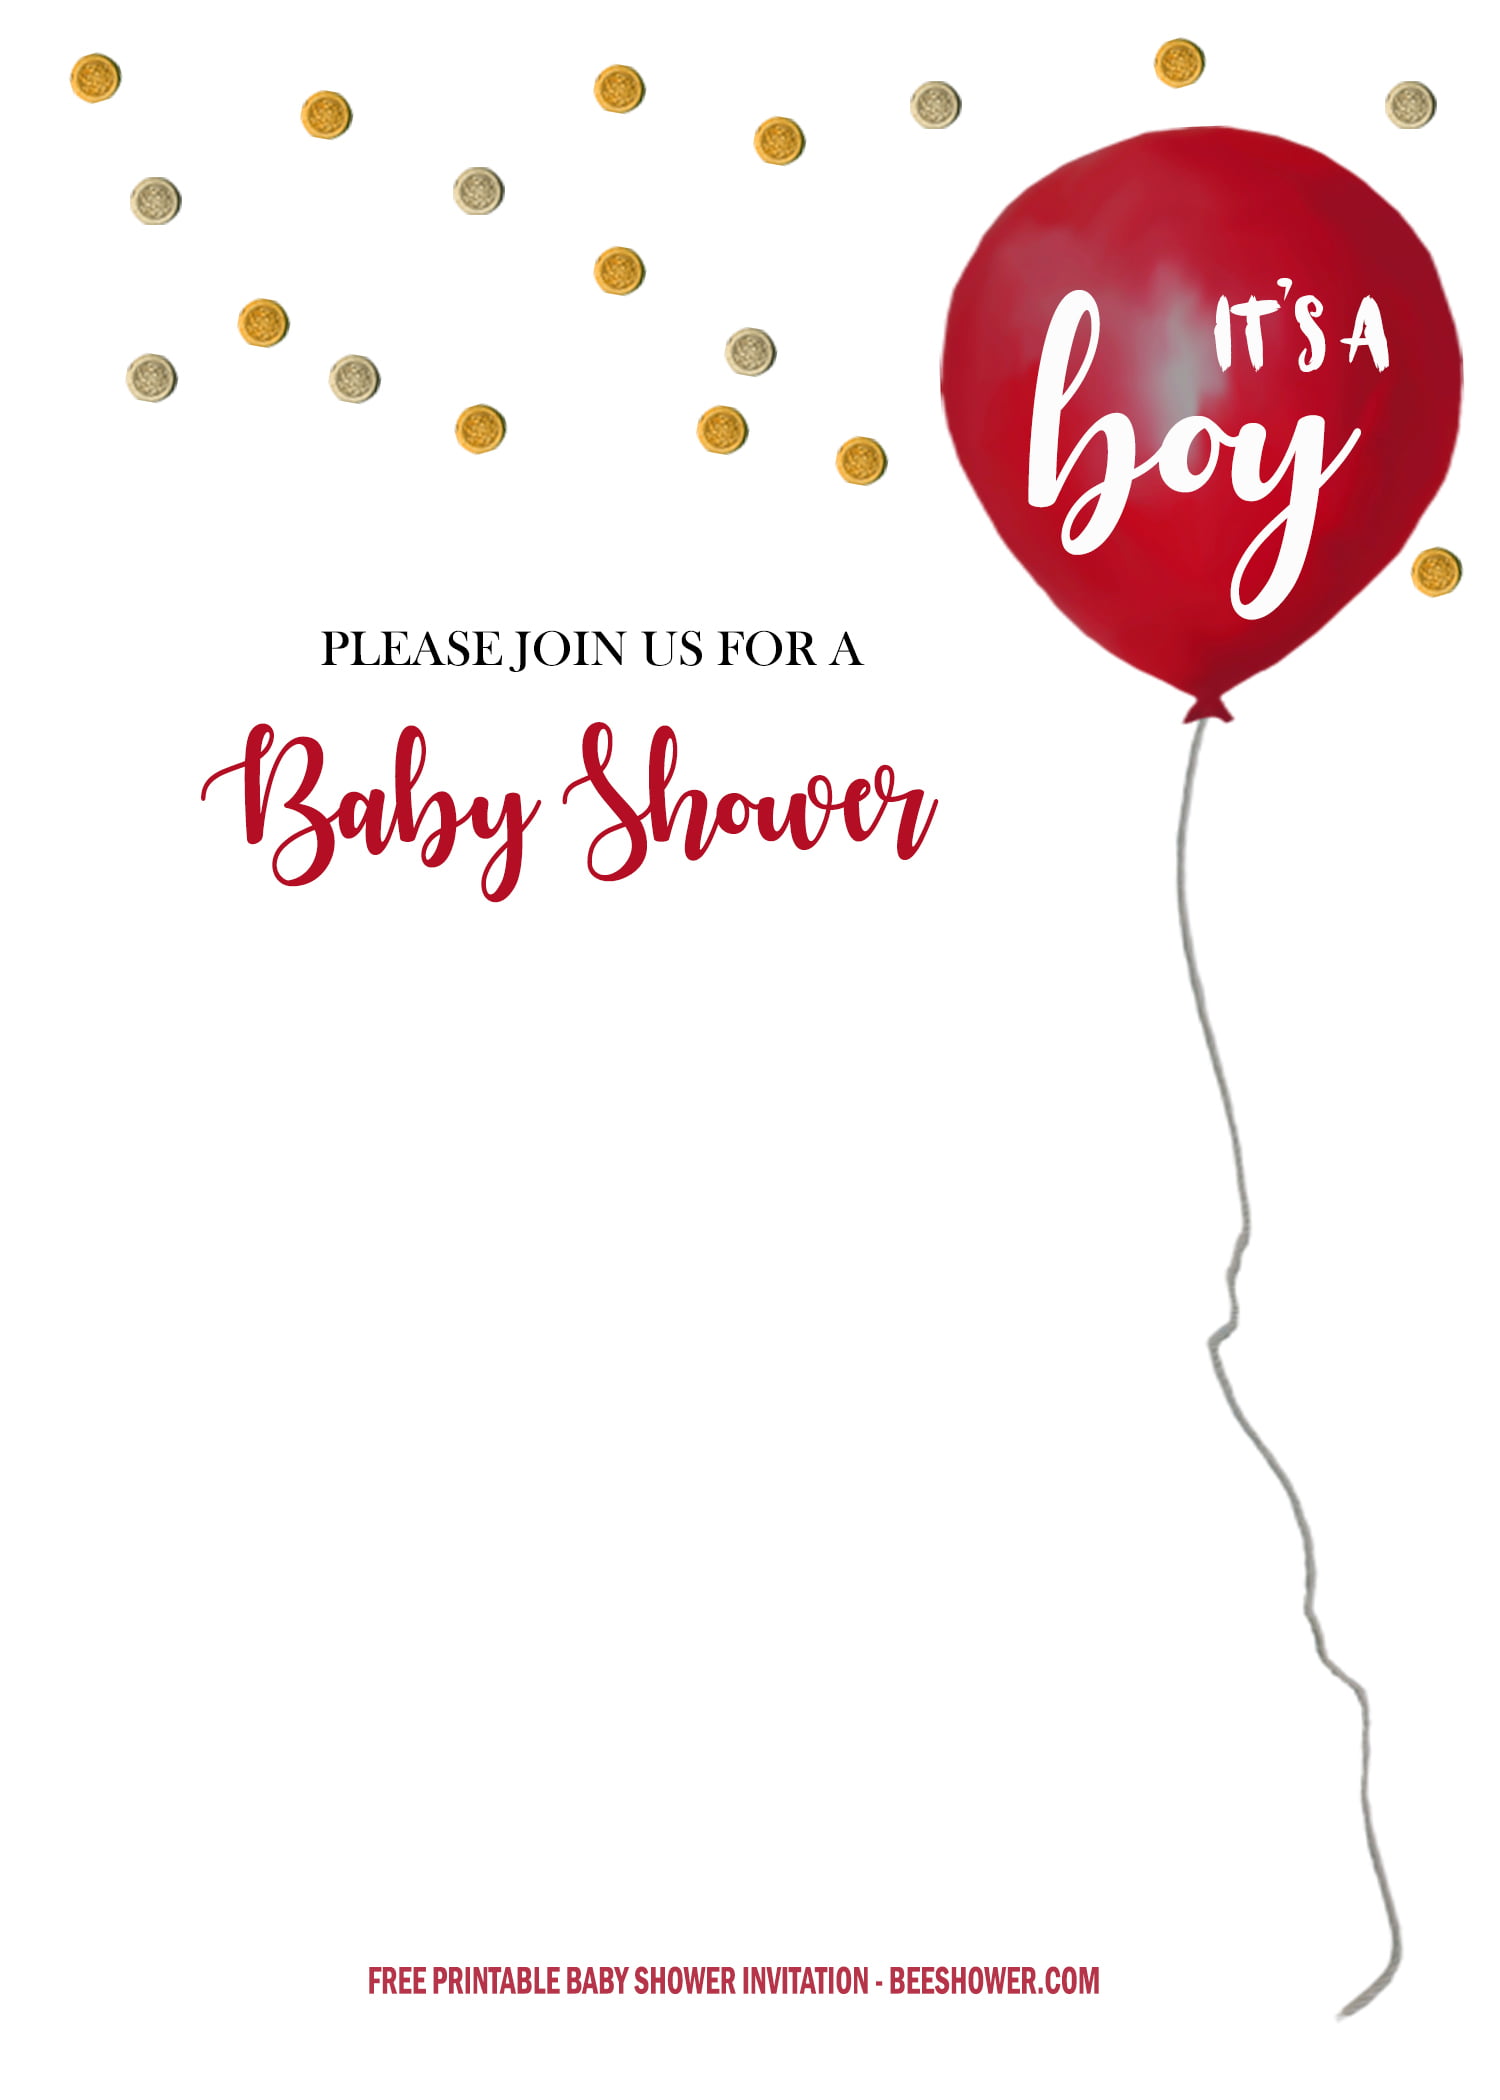 FREE It's a Boy Baby shower Invitation Templates | FREE Printable Baby Shower Invitations Templates